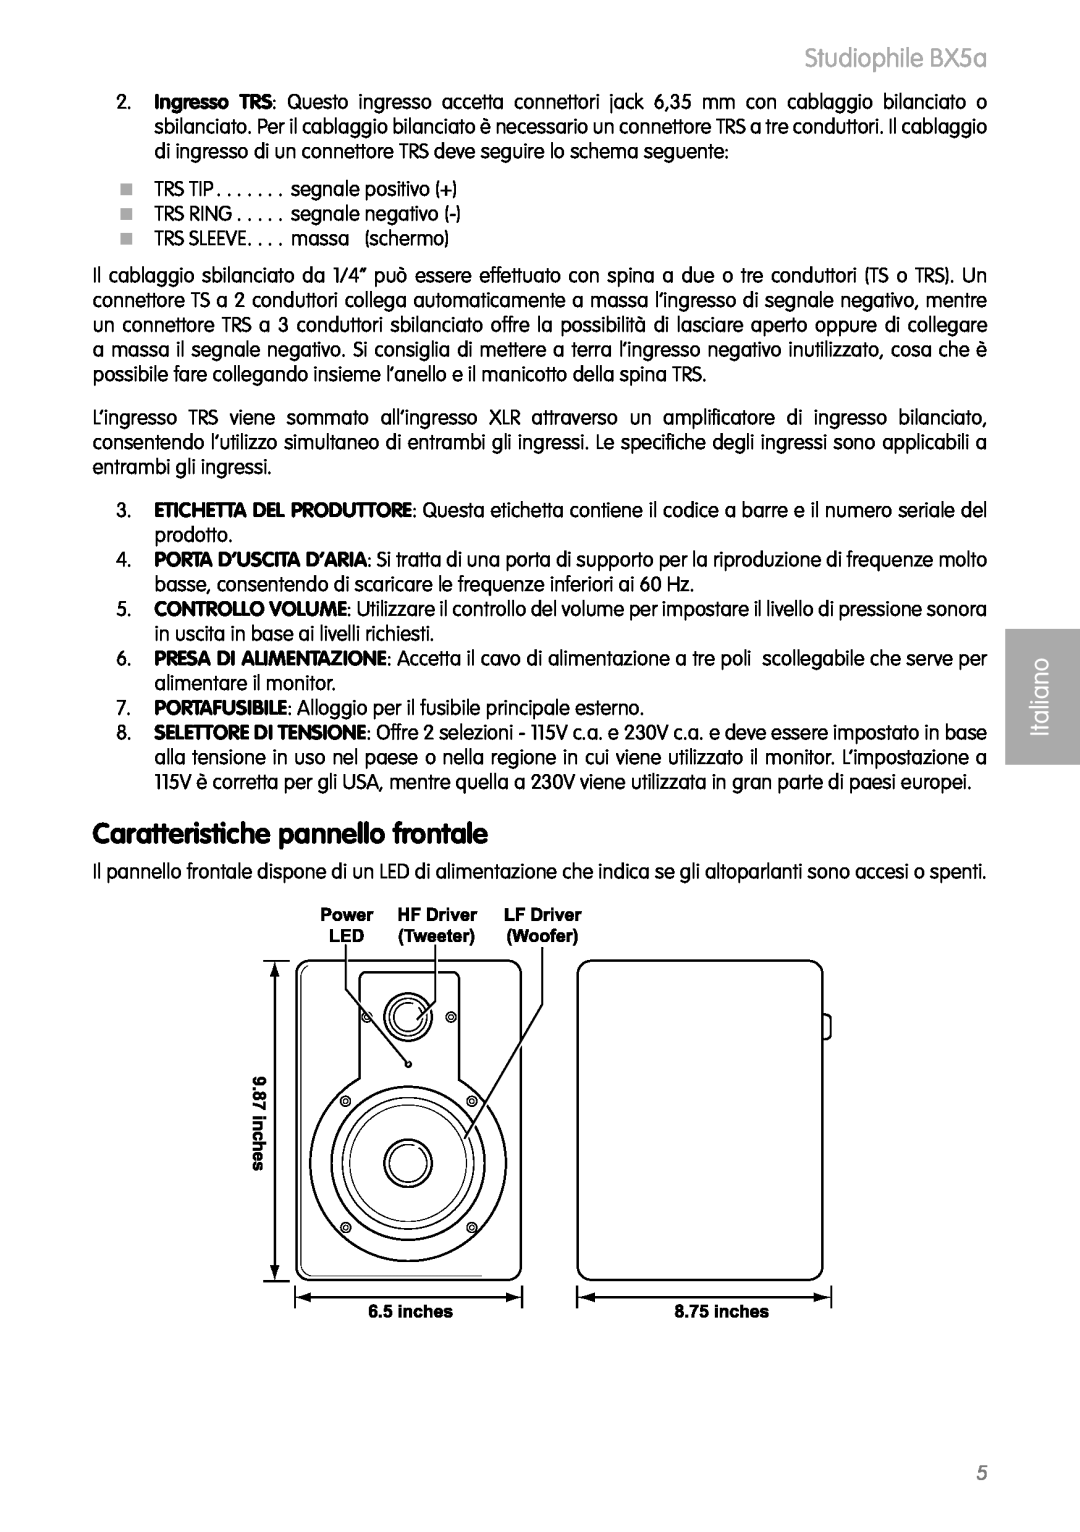 M-Audio BX5as manual Caratteristiche pannello frontale, Studiophile BX5a, Italiano 